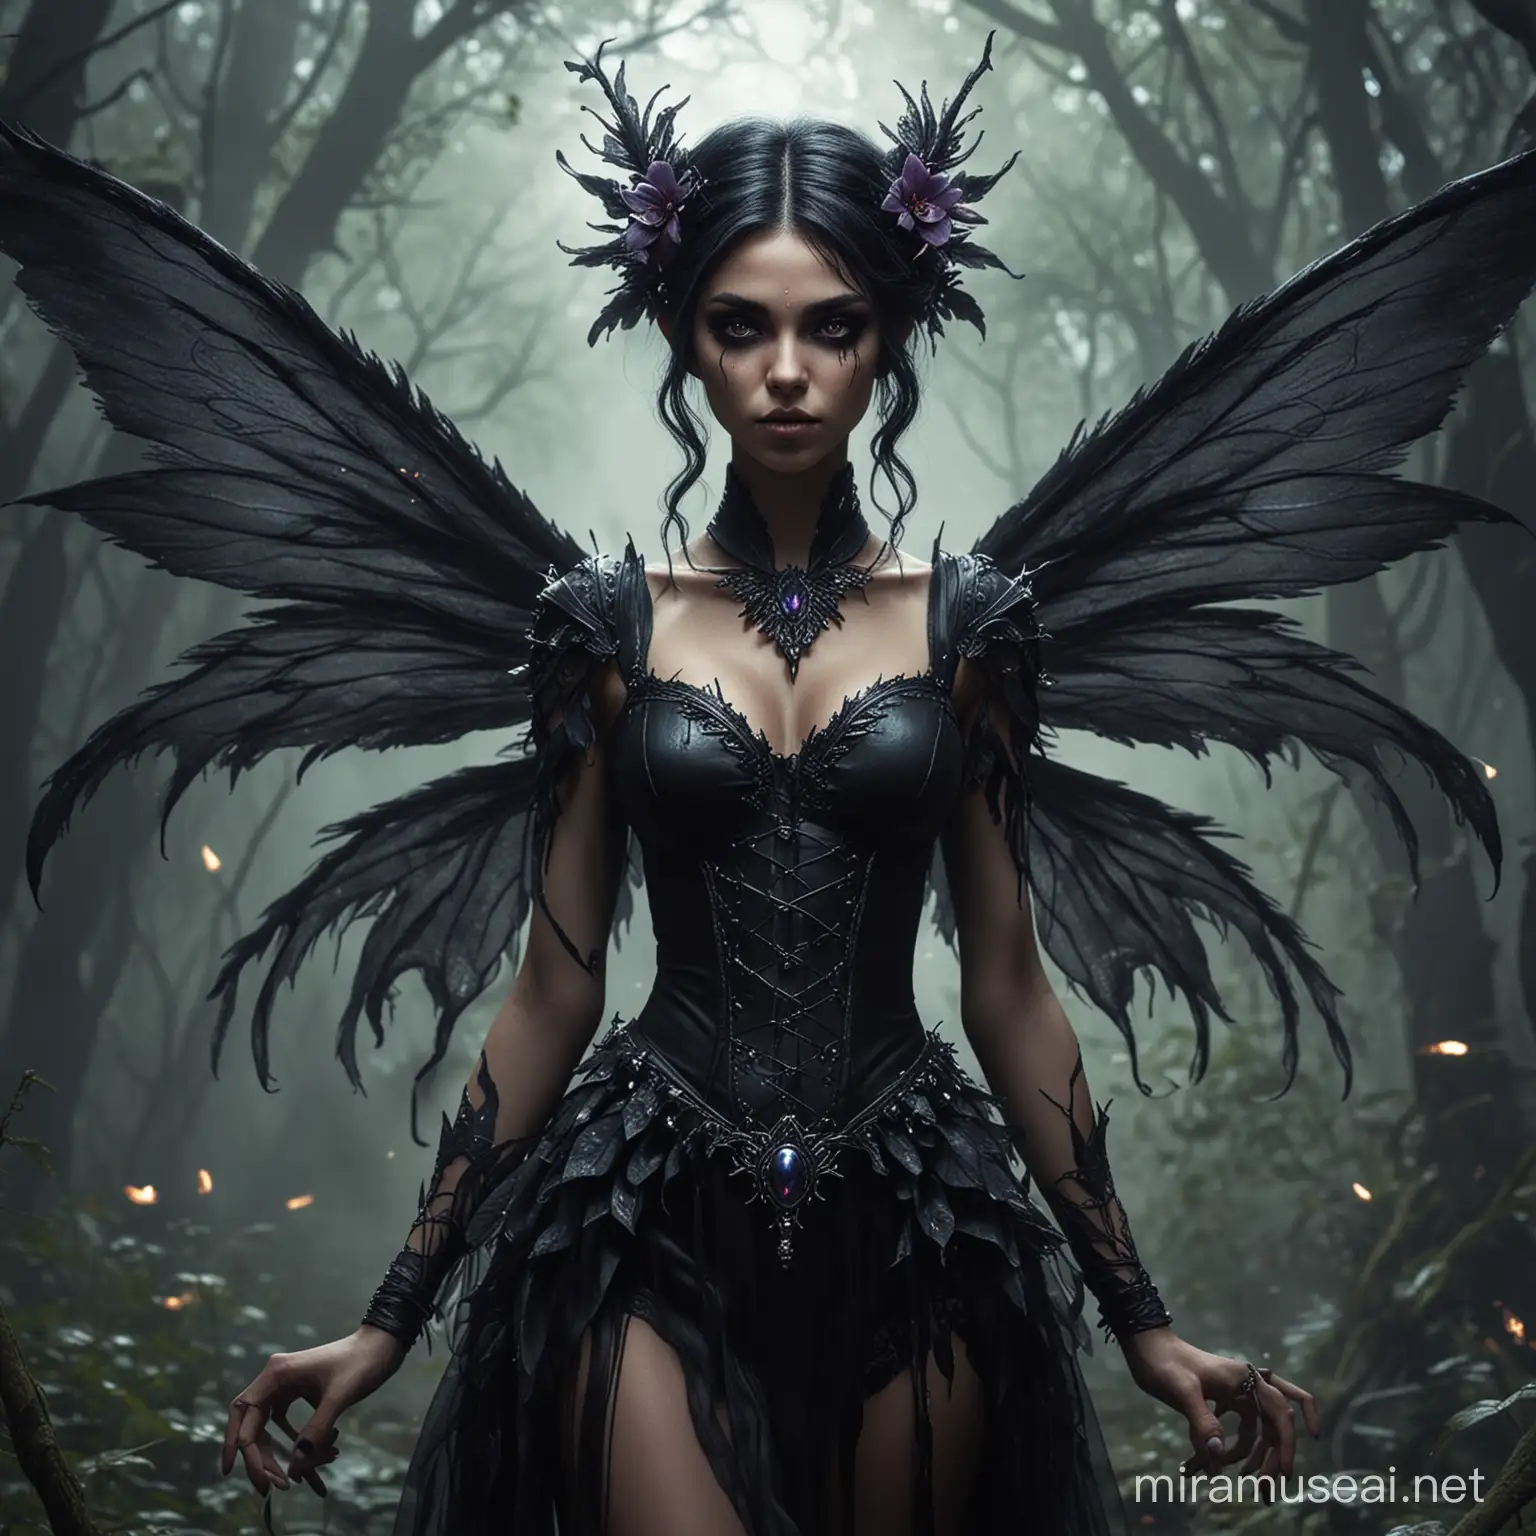 Malevolent Dark Feywild Fairy in Enchanted Forest